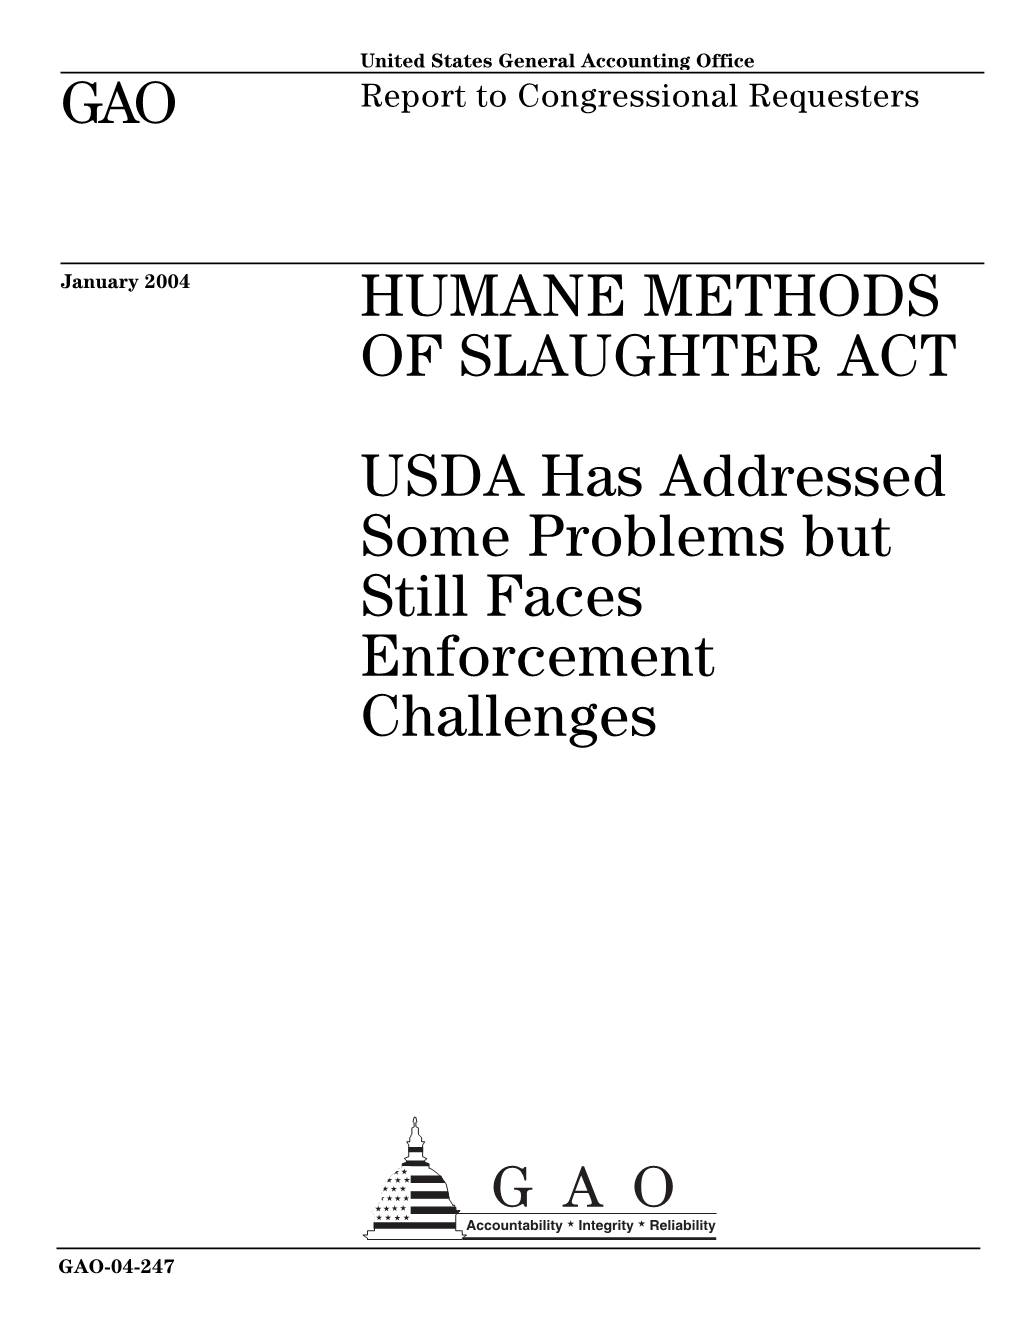 GAO-04-247 Humane Methods of Slaughter